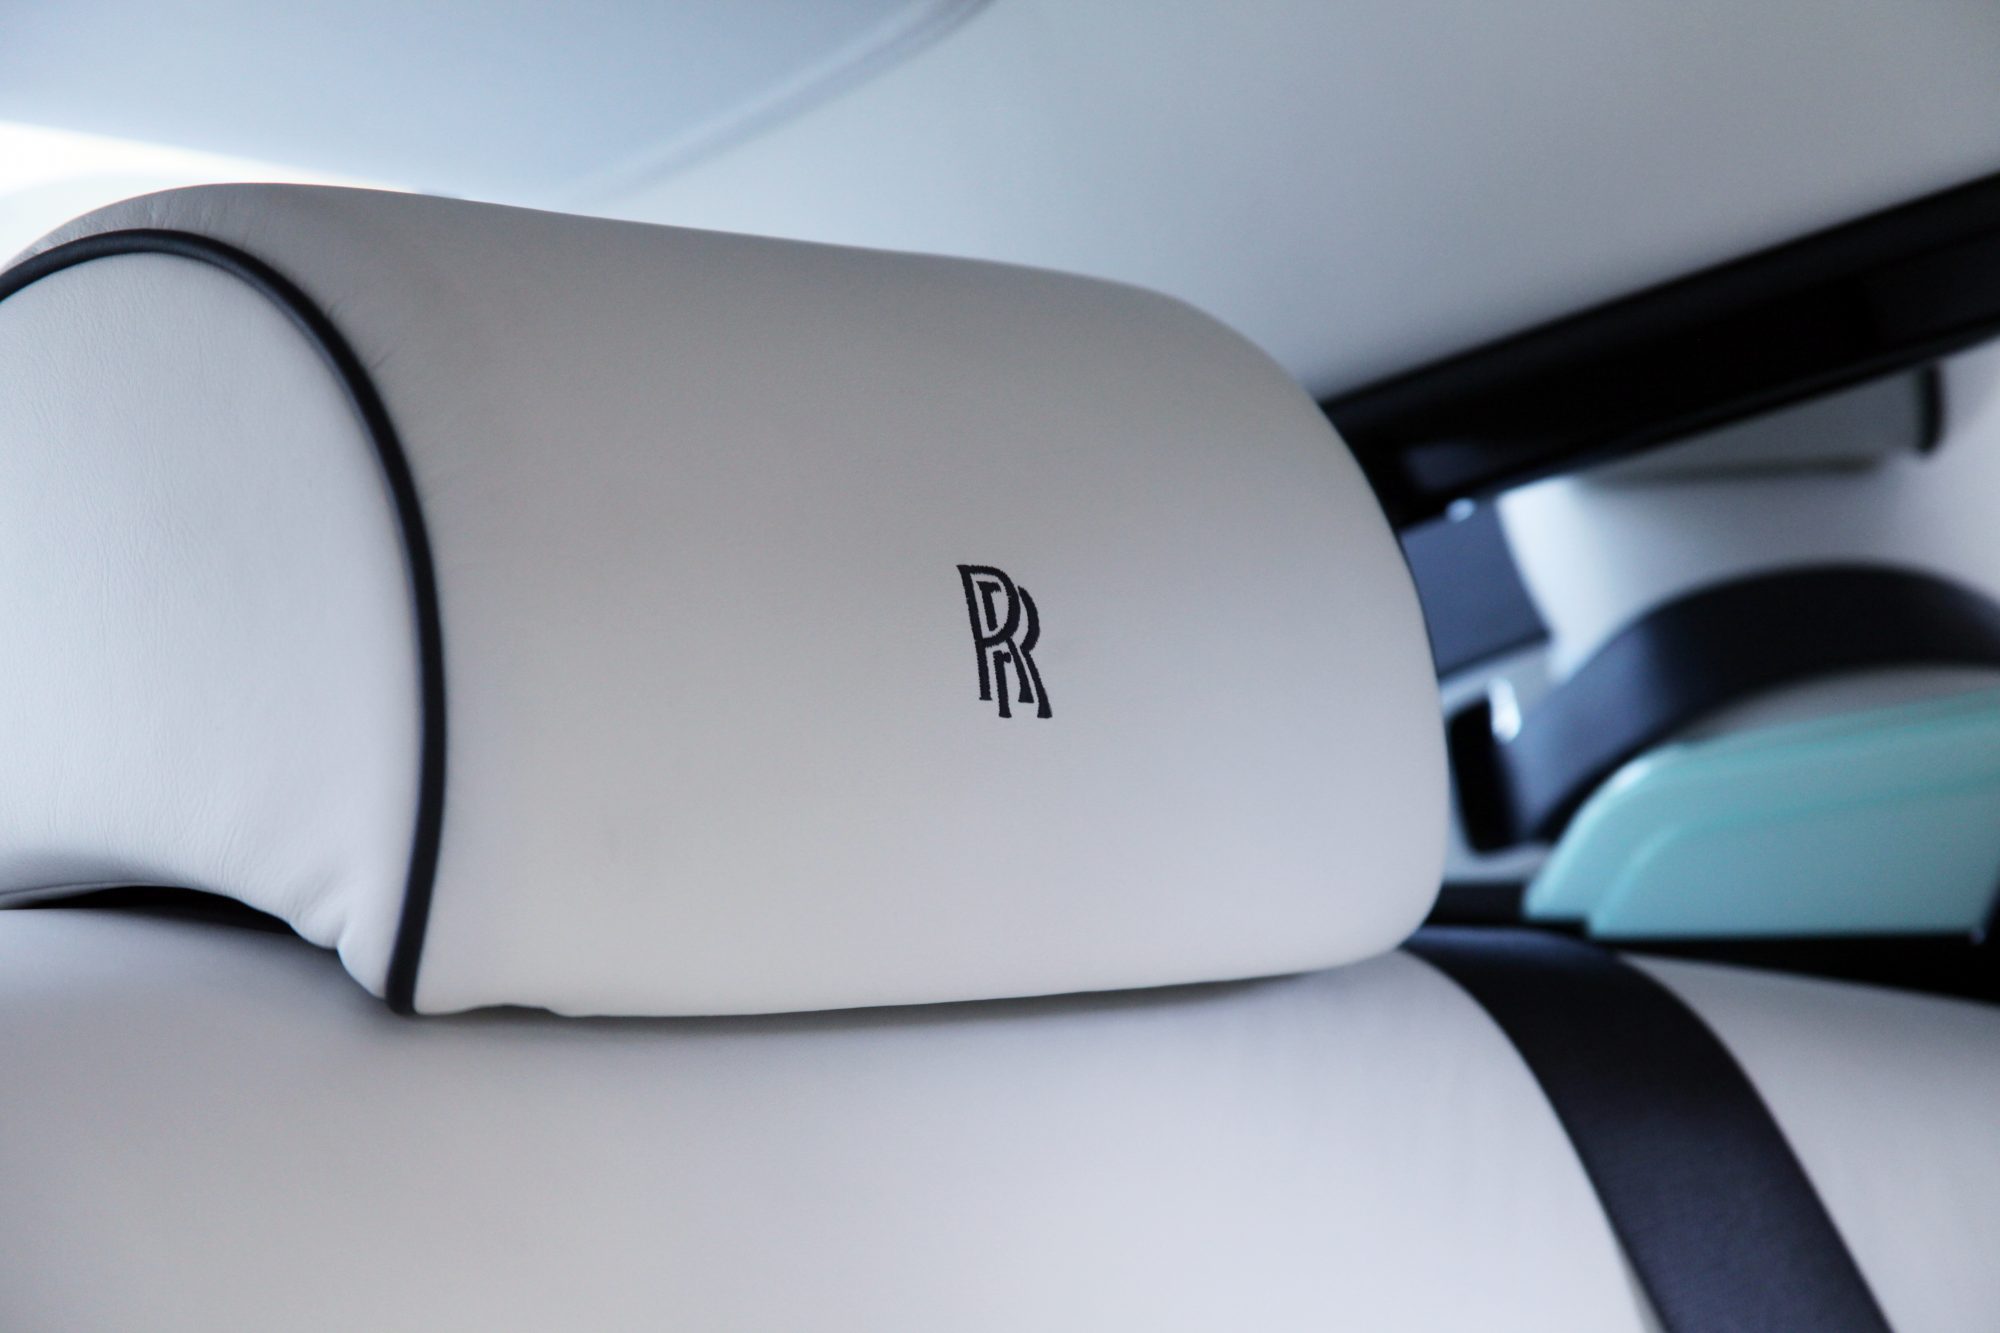 Rolls-Royce Phantom interior